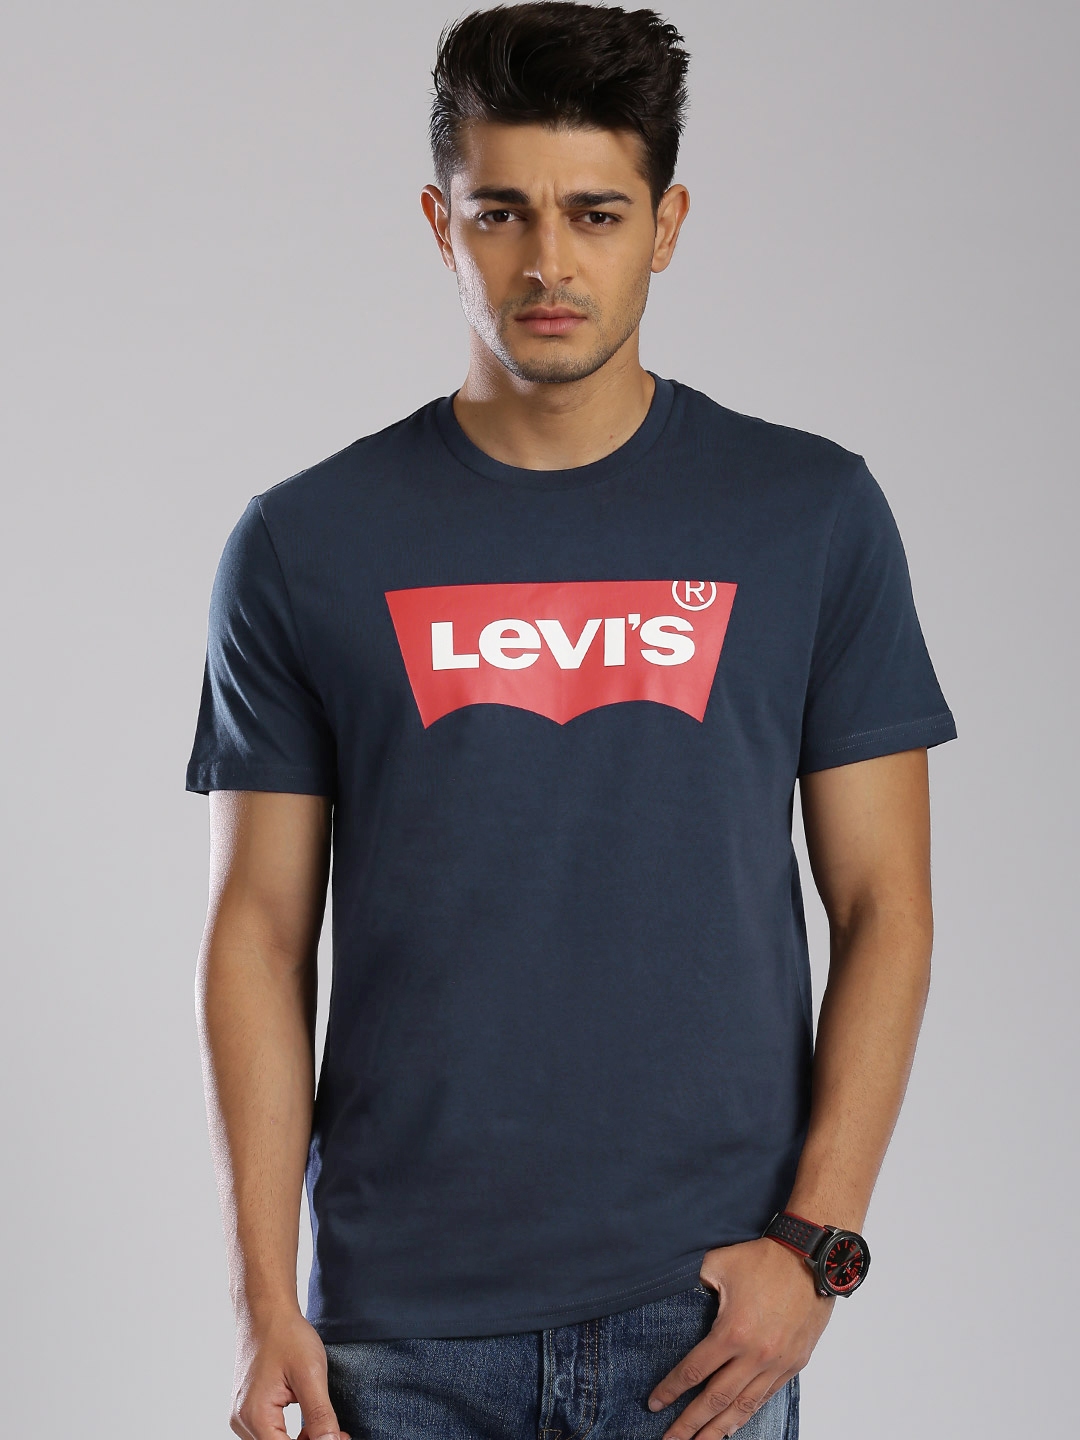 Buy Levis Blue Printed Pure Cotton T Shirt - Tshirts for Men 1424139 ...